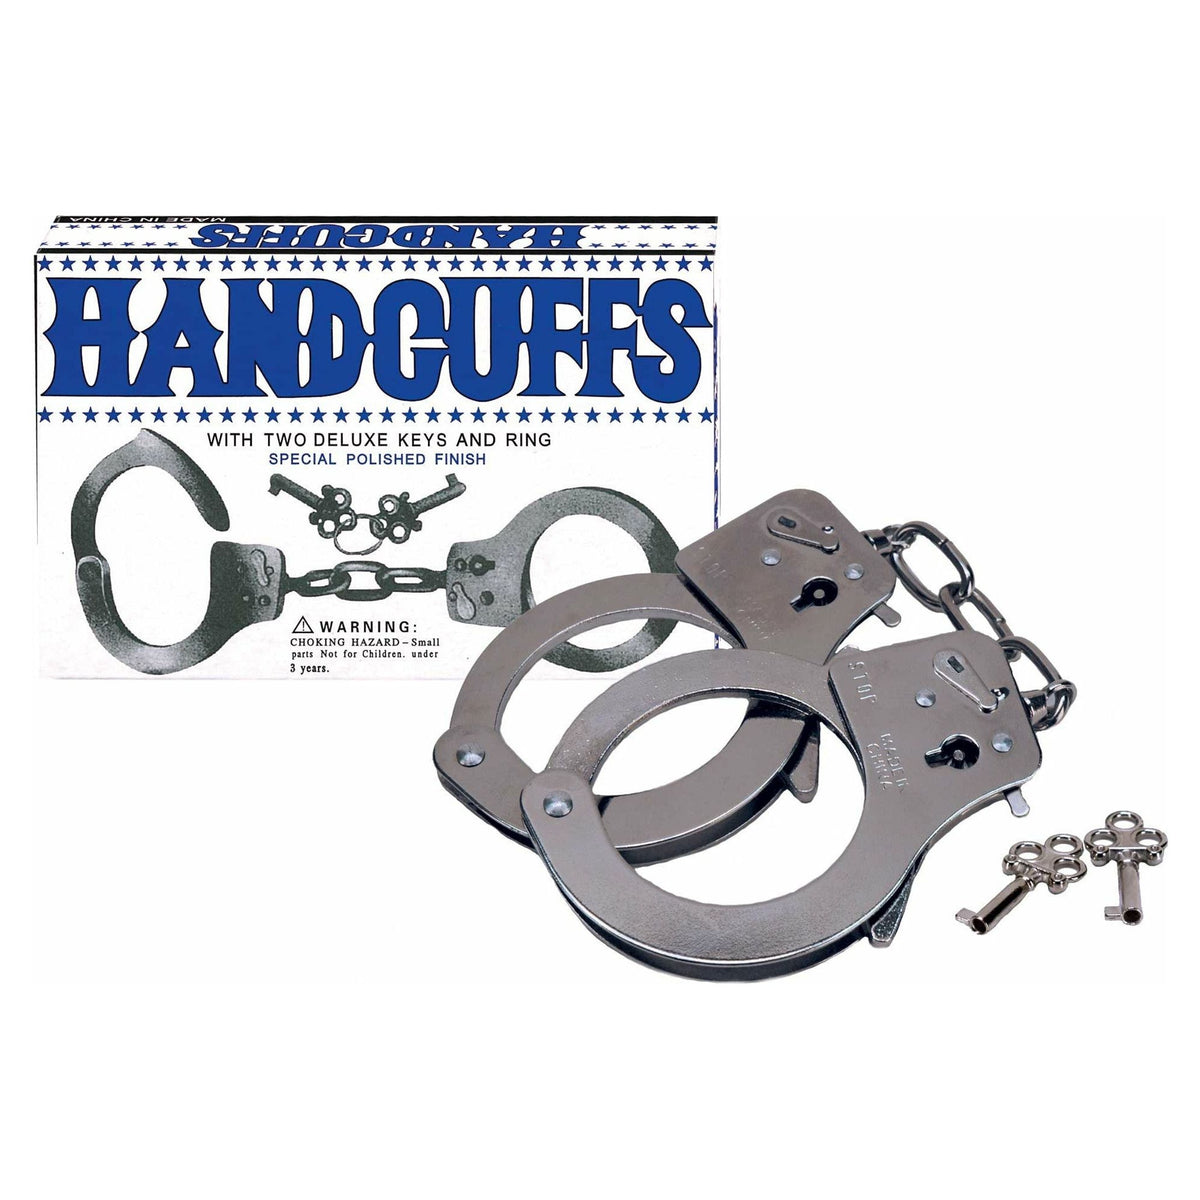 BDSM Metal Handcuffs